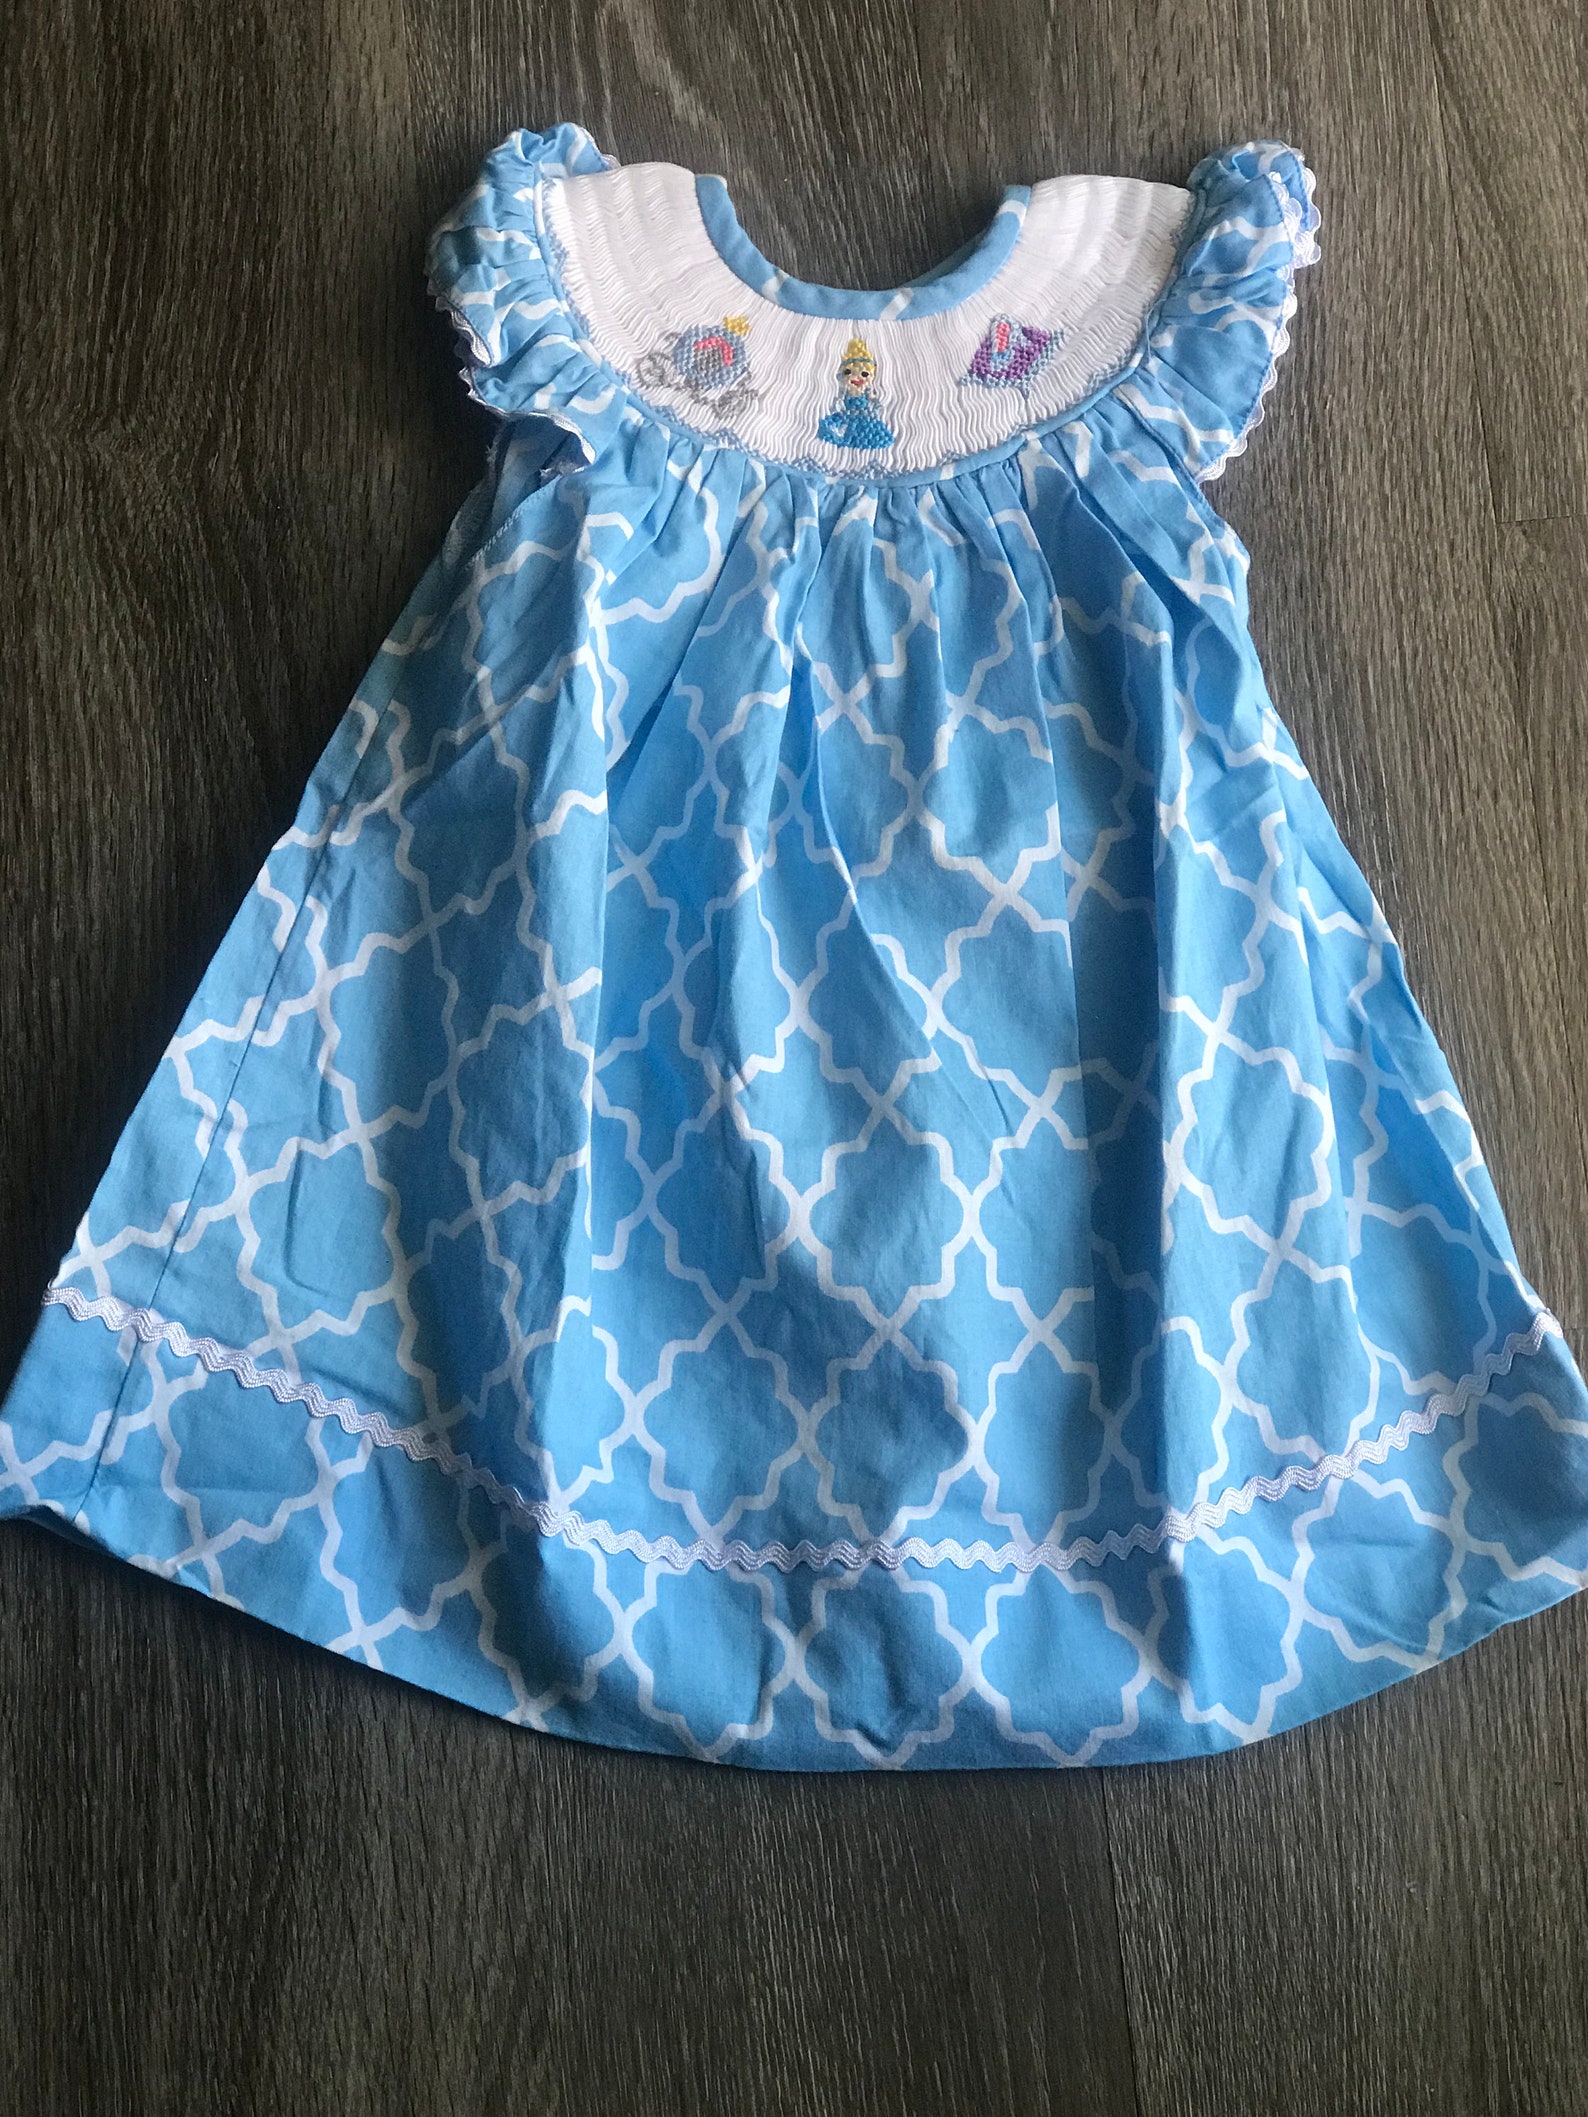 NWT Smocked Cinderella Princess Dress 3t | Etsy